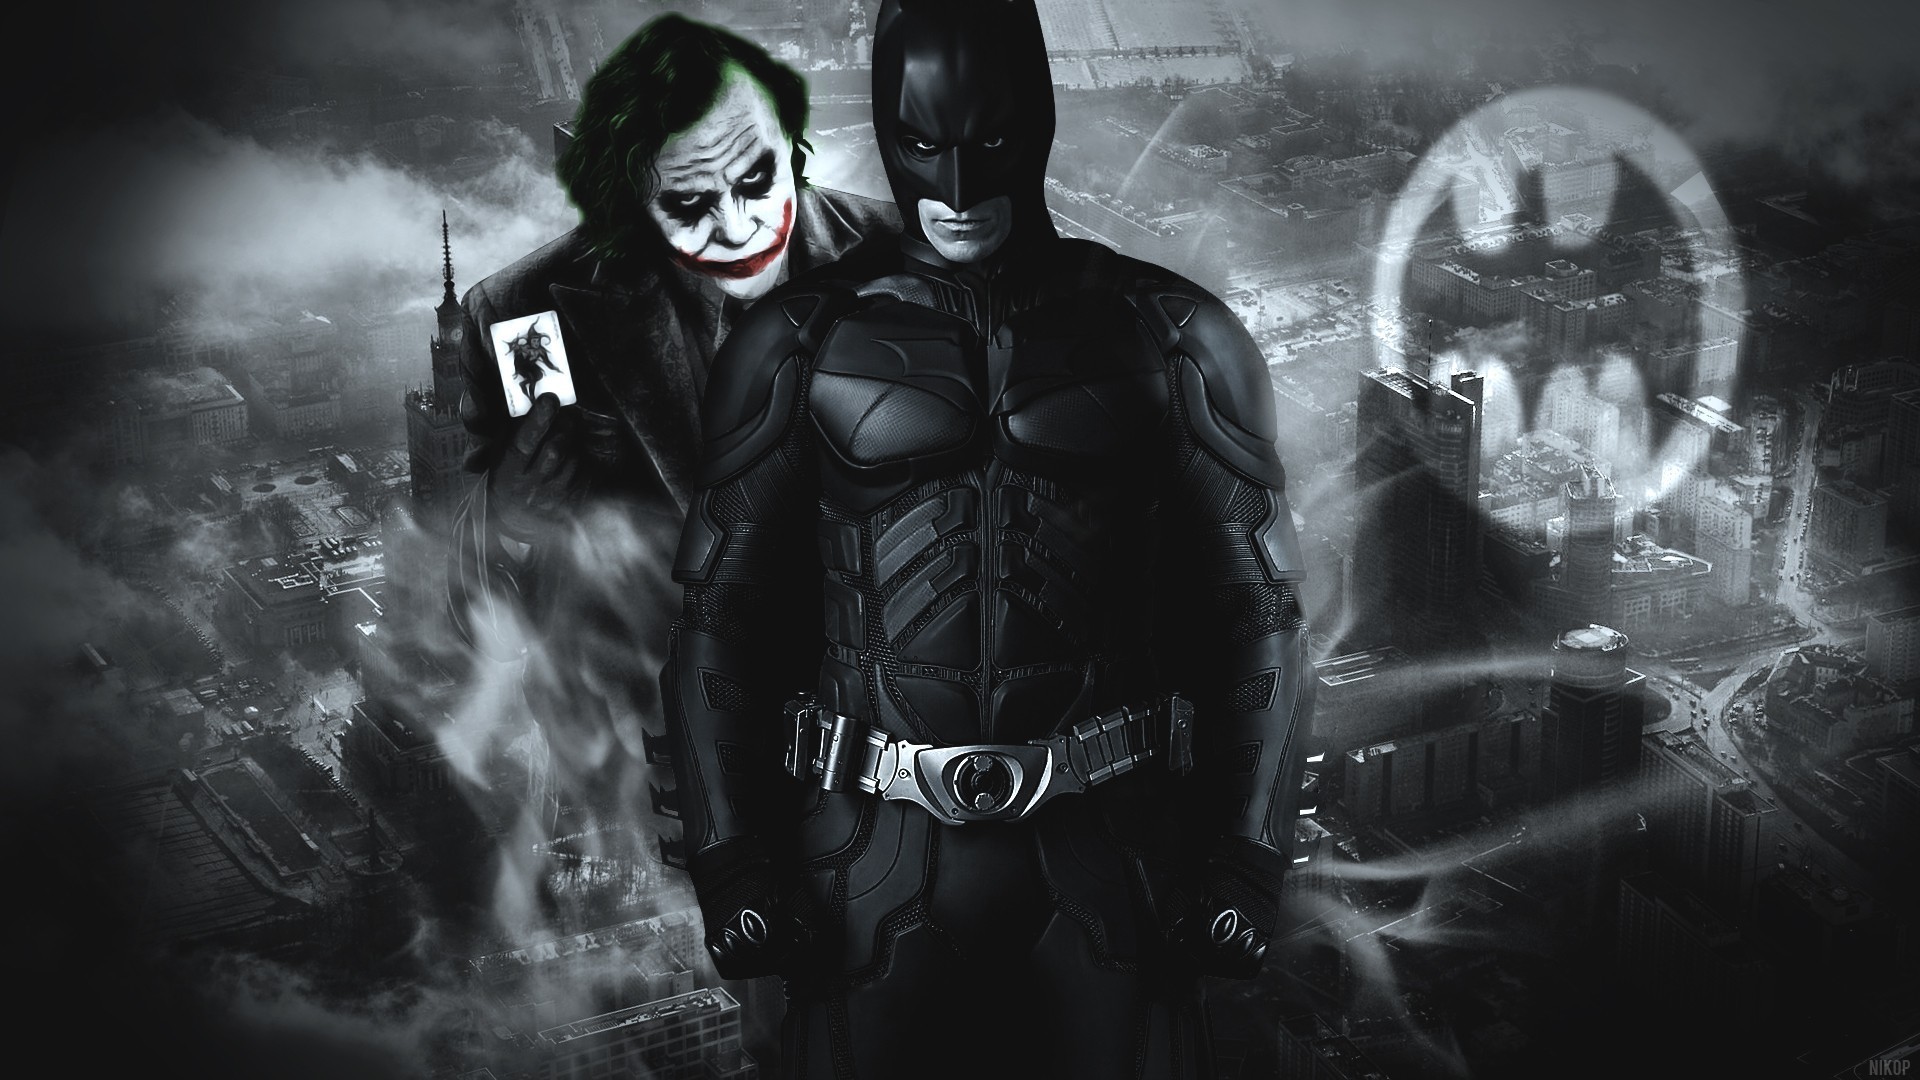 Batman Vs Joker wallpaper in 360x720 resolution